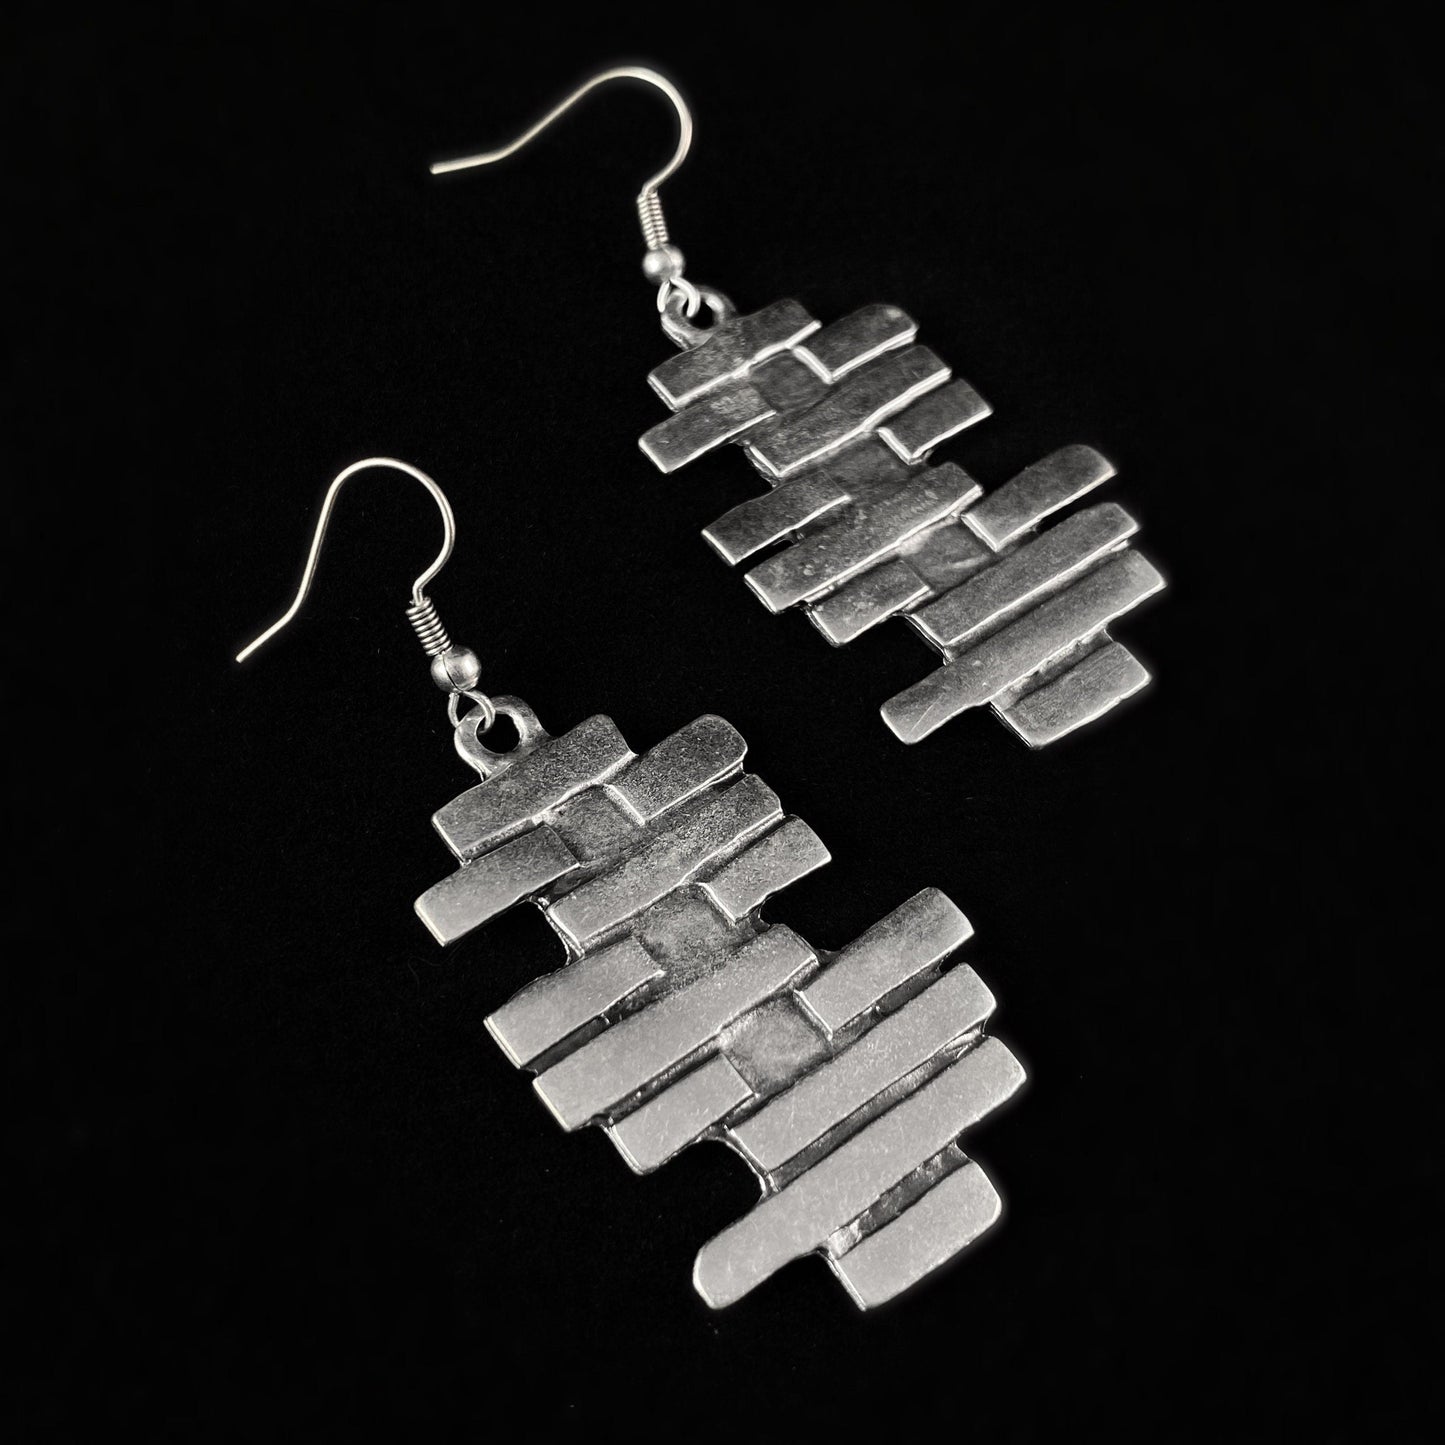 Silver Abstract Brick Drop Earrings, Handmade, Nickel Free - Elegant Minimalist Jewelry for Women